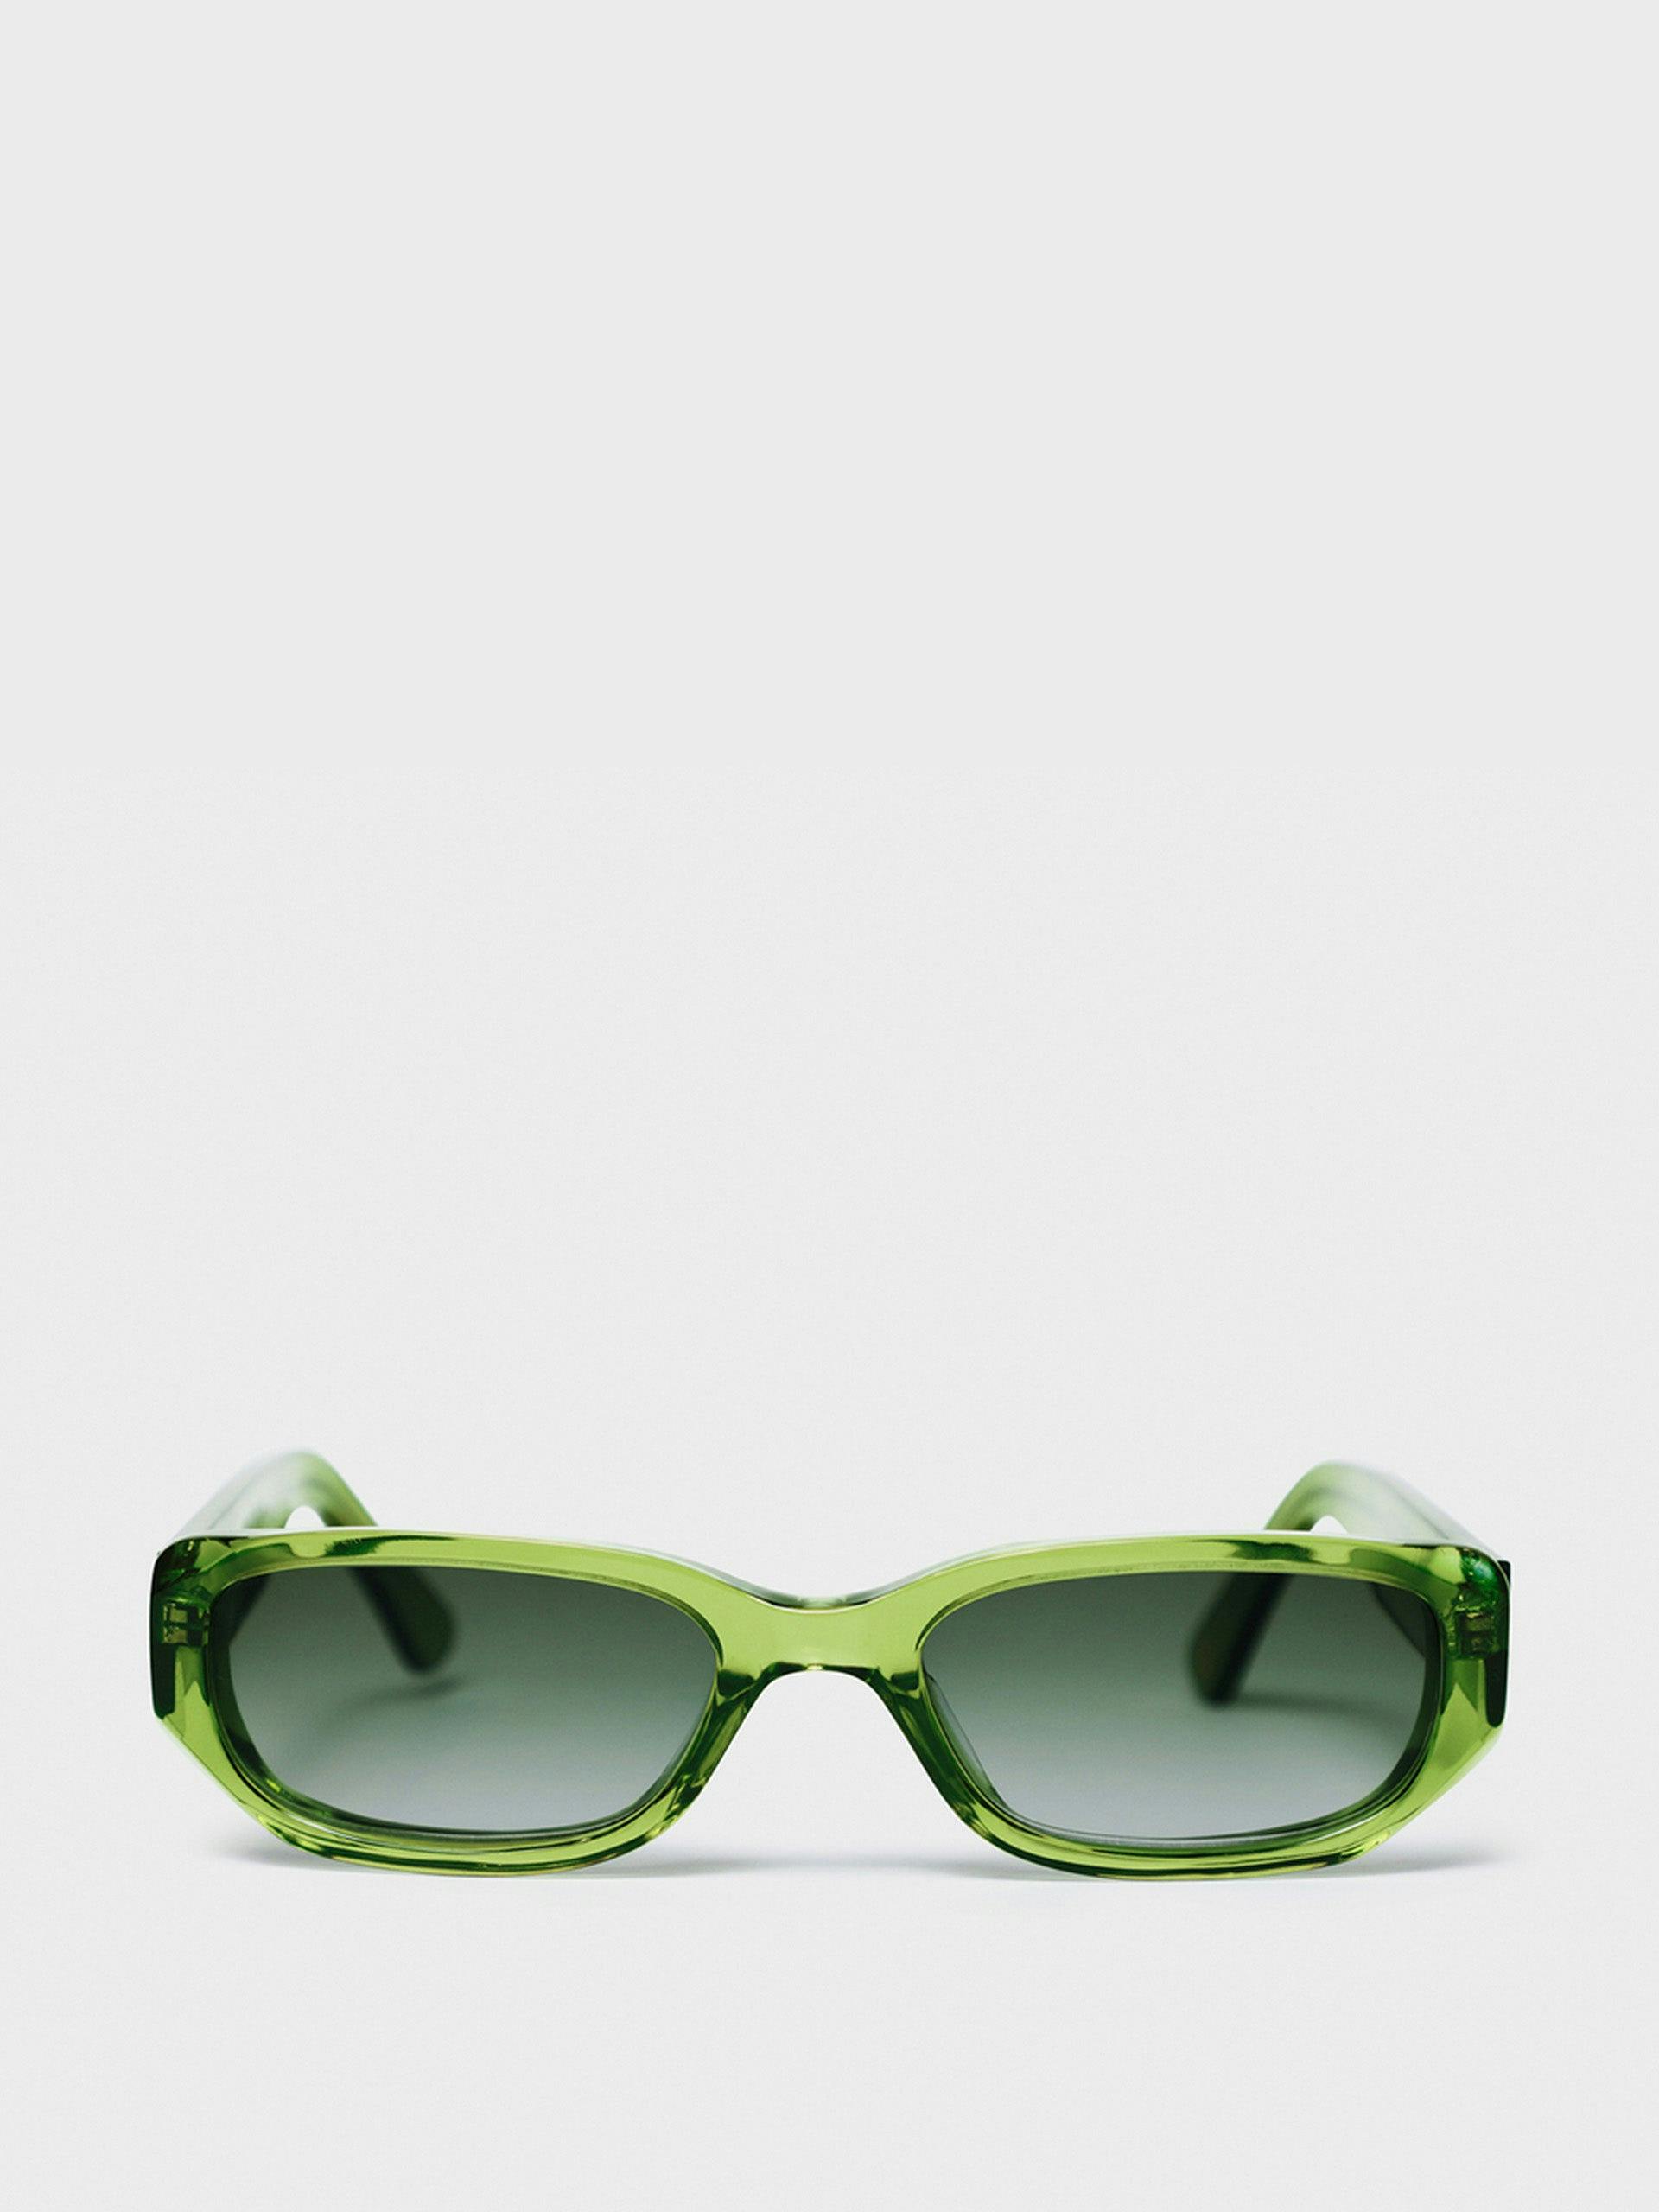 Olive green Ore sunglasses